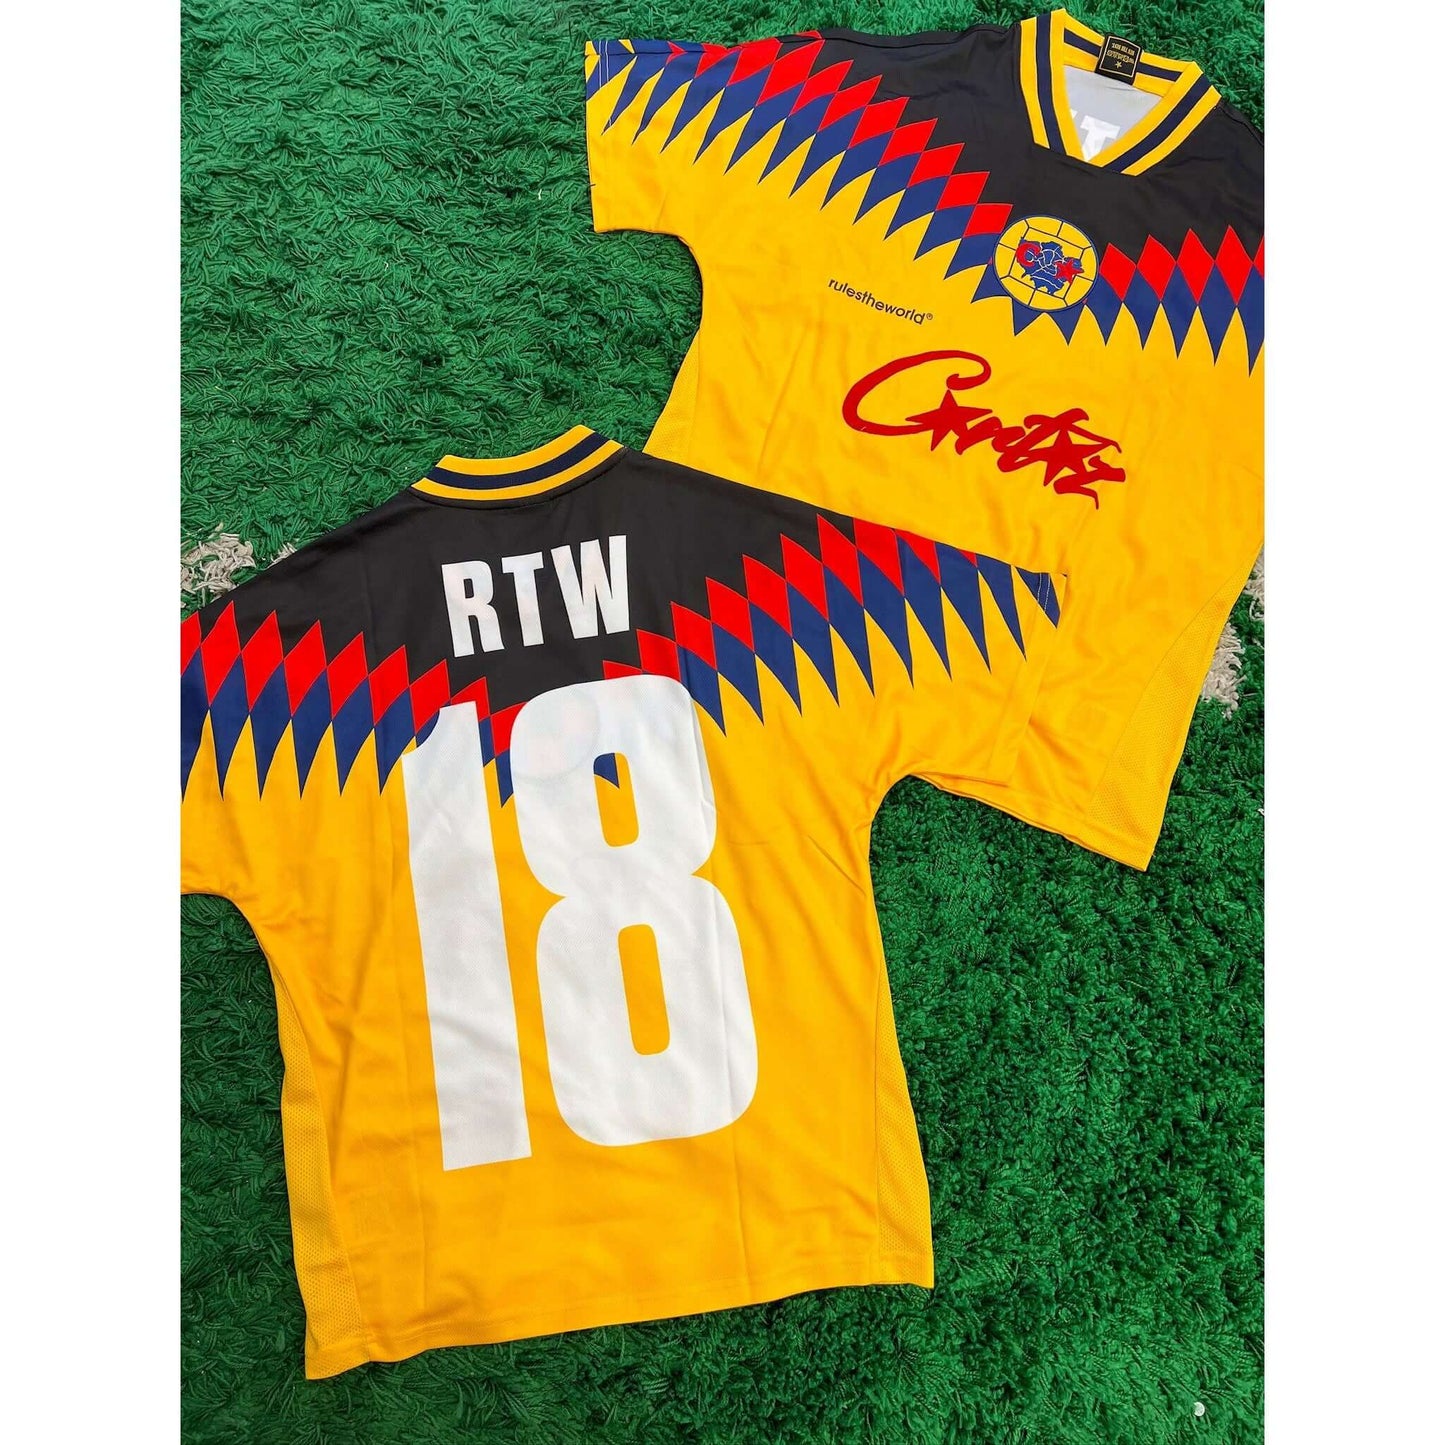 Corteiz Club RTW Football Jersey Multicolor from Corteiz